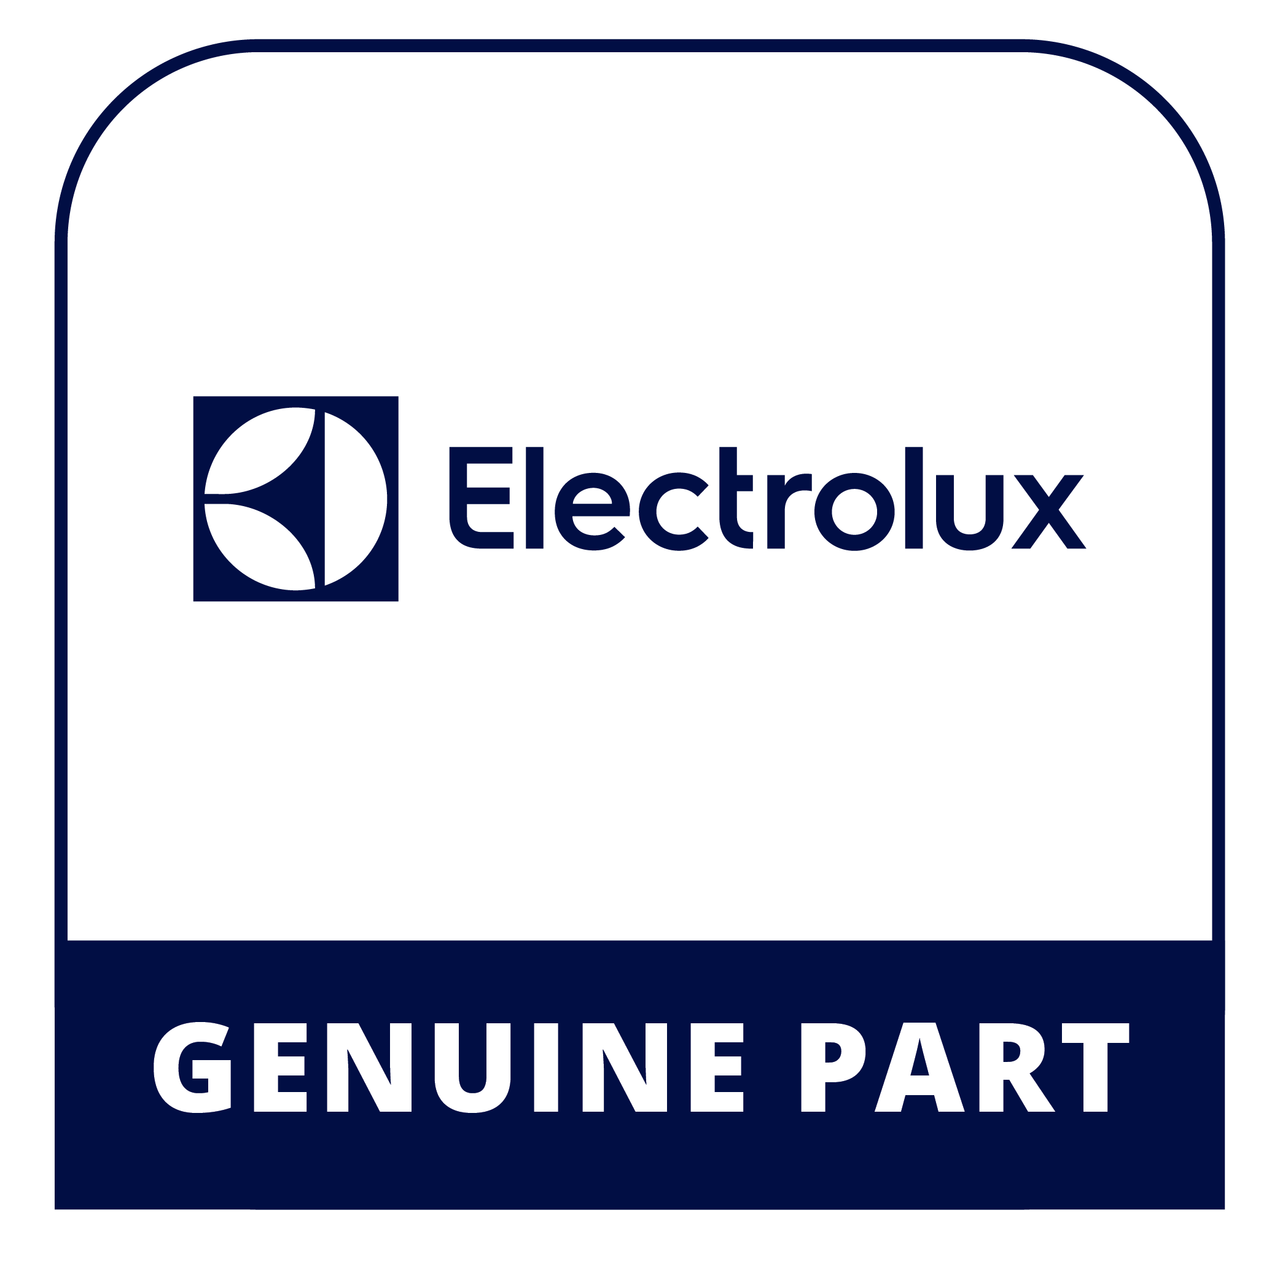 Frigidaire - Electrolux 316557120 Clock - Genuine Electrolux Part